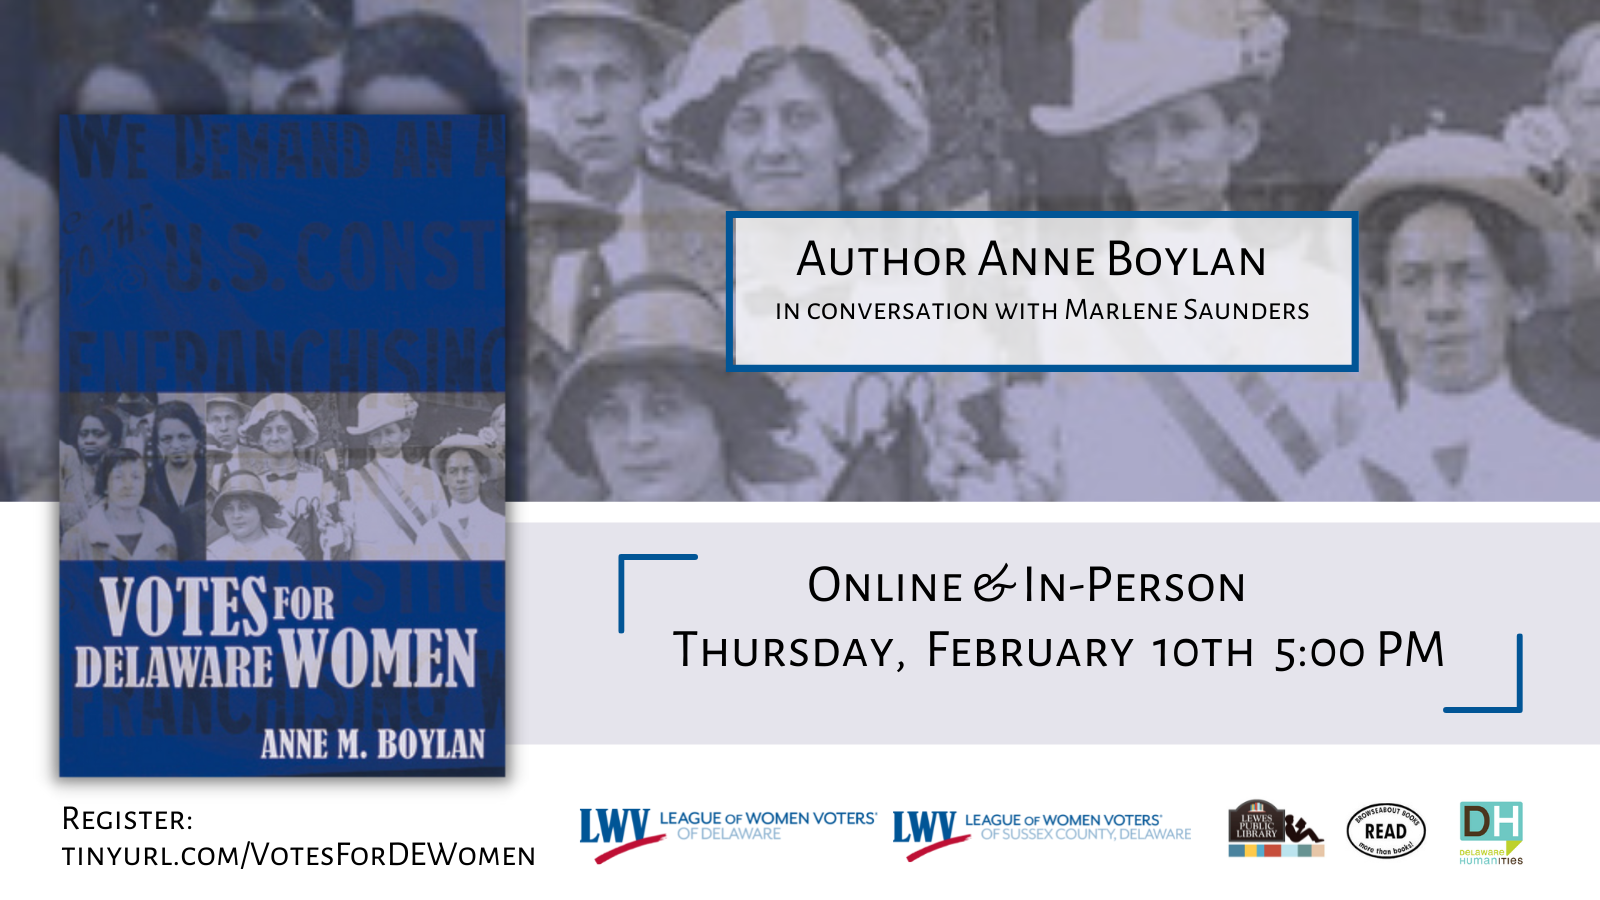 Author Anne Boylan in conversation with Marlene Saunders, photo of book cover "Votes for Delaware Women"; Register: tinyurl.com/VotesForDEWomen